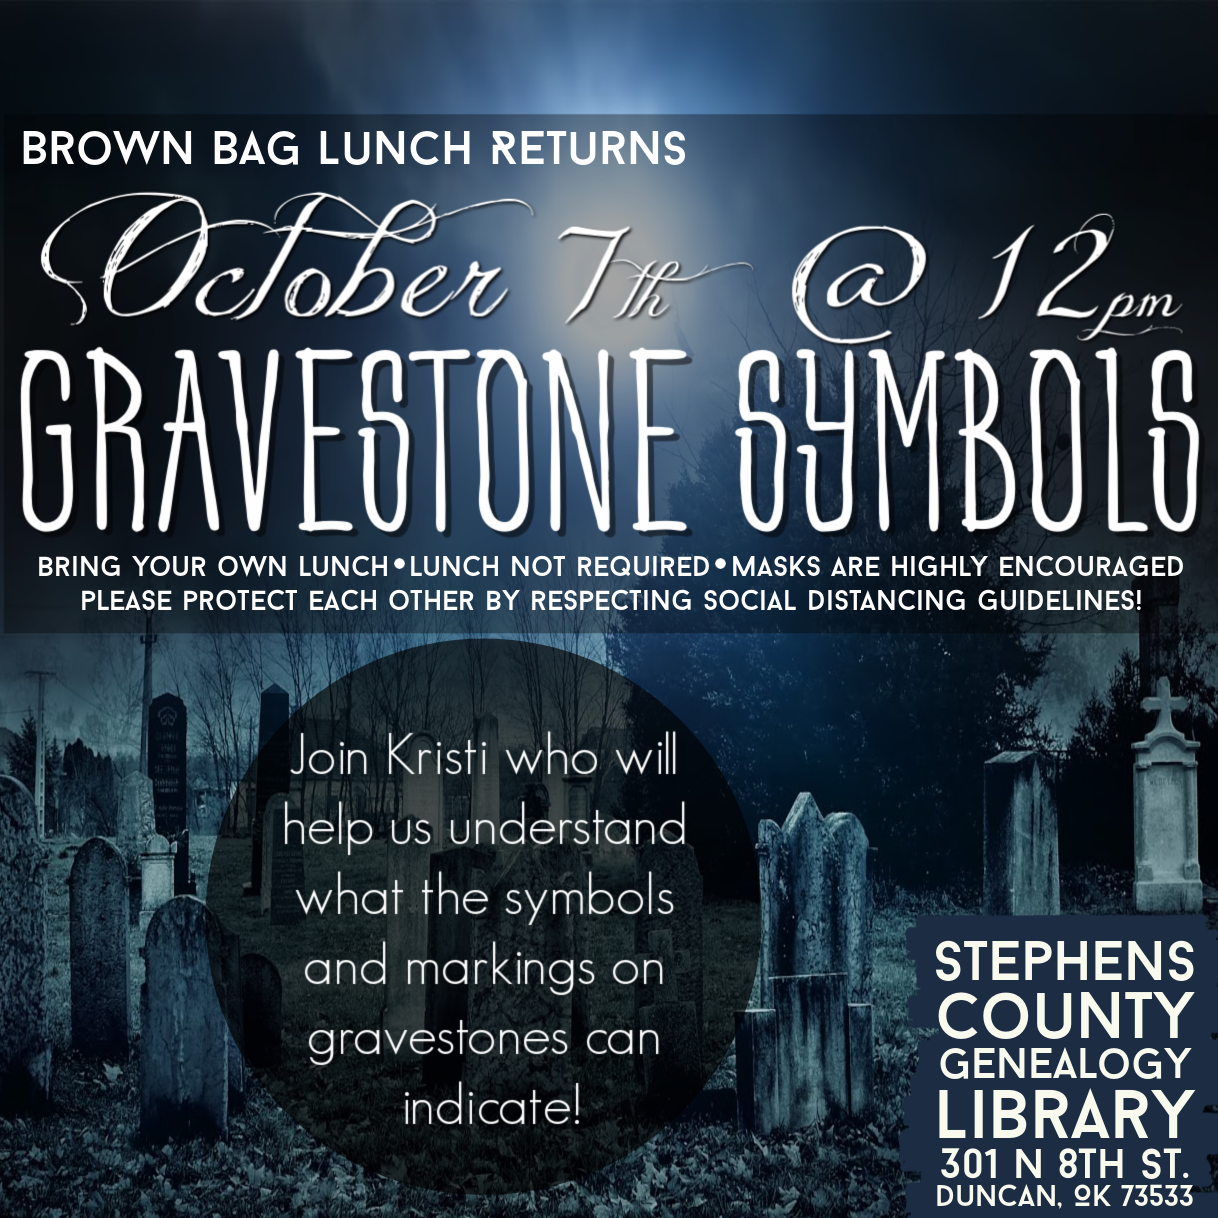 Brown Bag Lunch: October 7, 2020 @ 12 pm. Gravestone Symbols